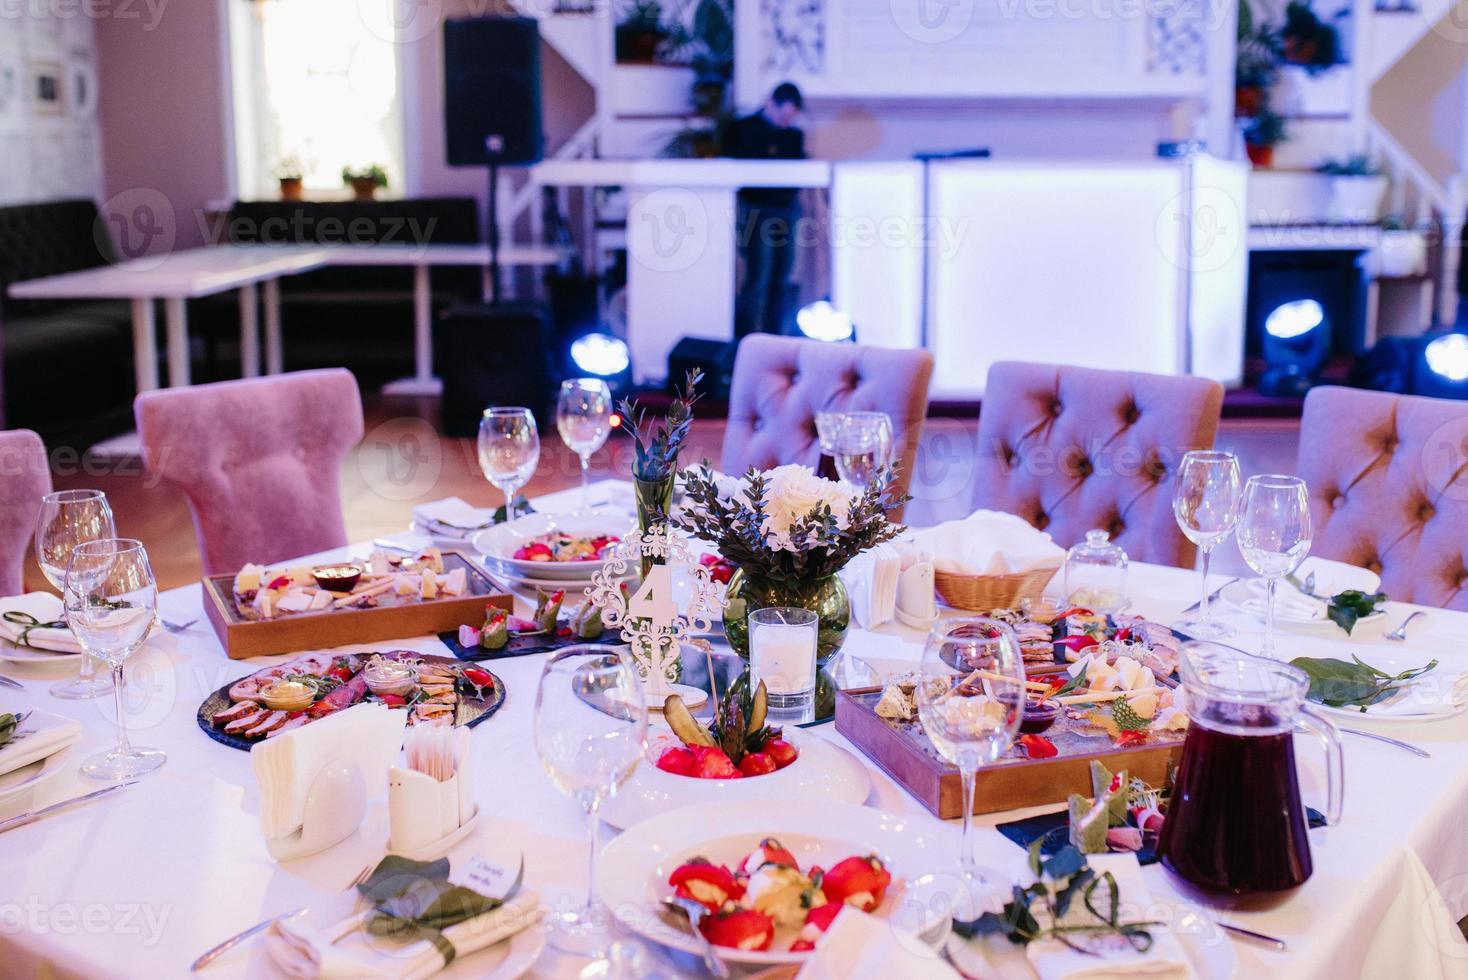 salón de banquetes para bodas con elementos decorativos foto